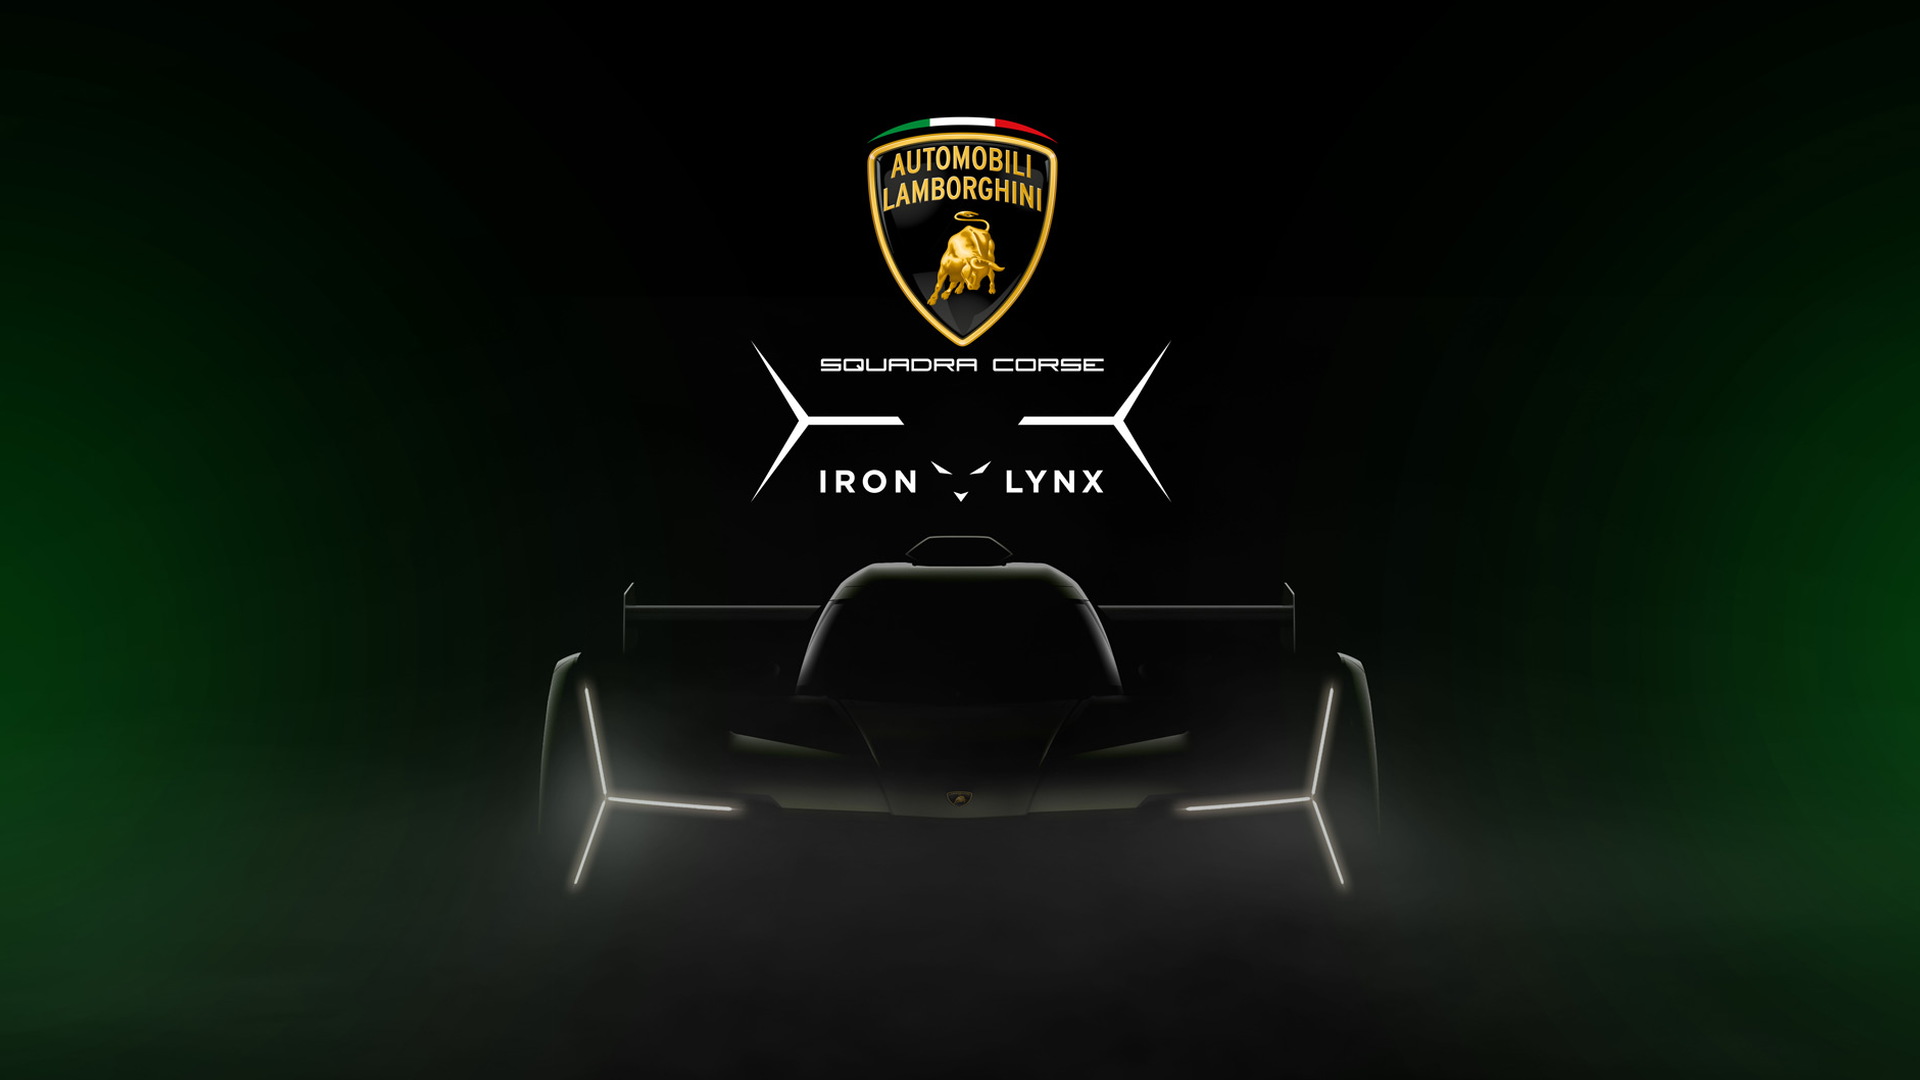 Lamborghini Iron Lynx race team